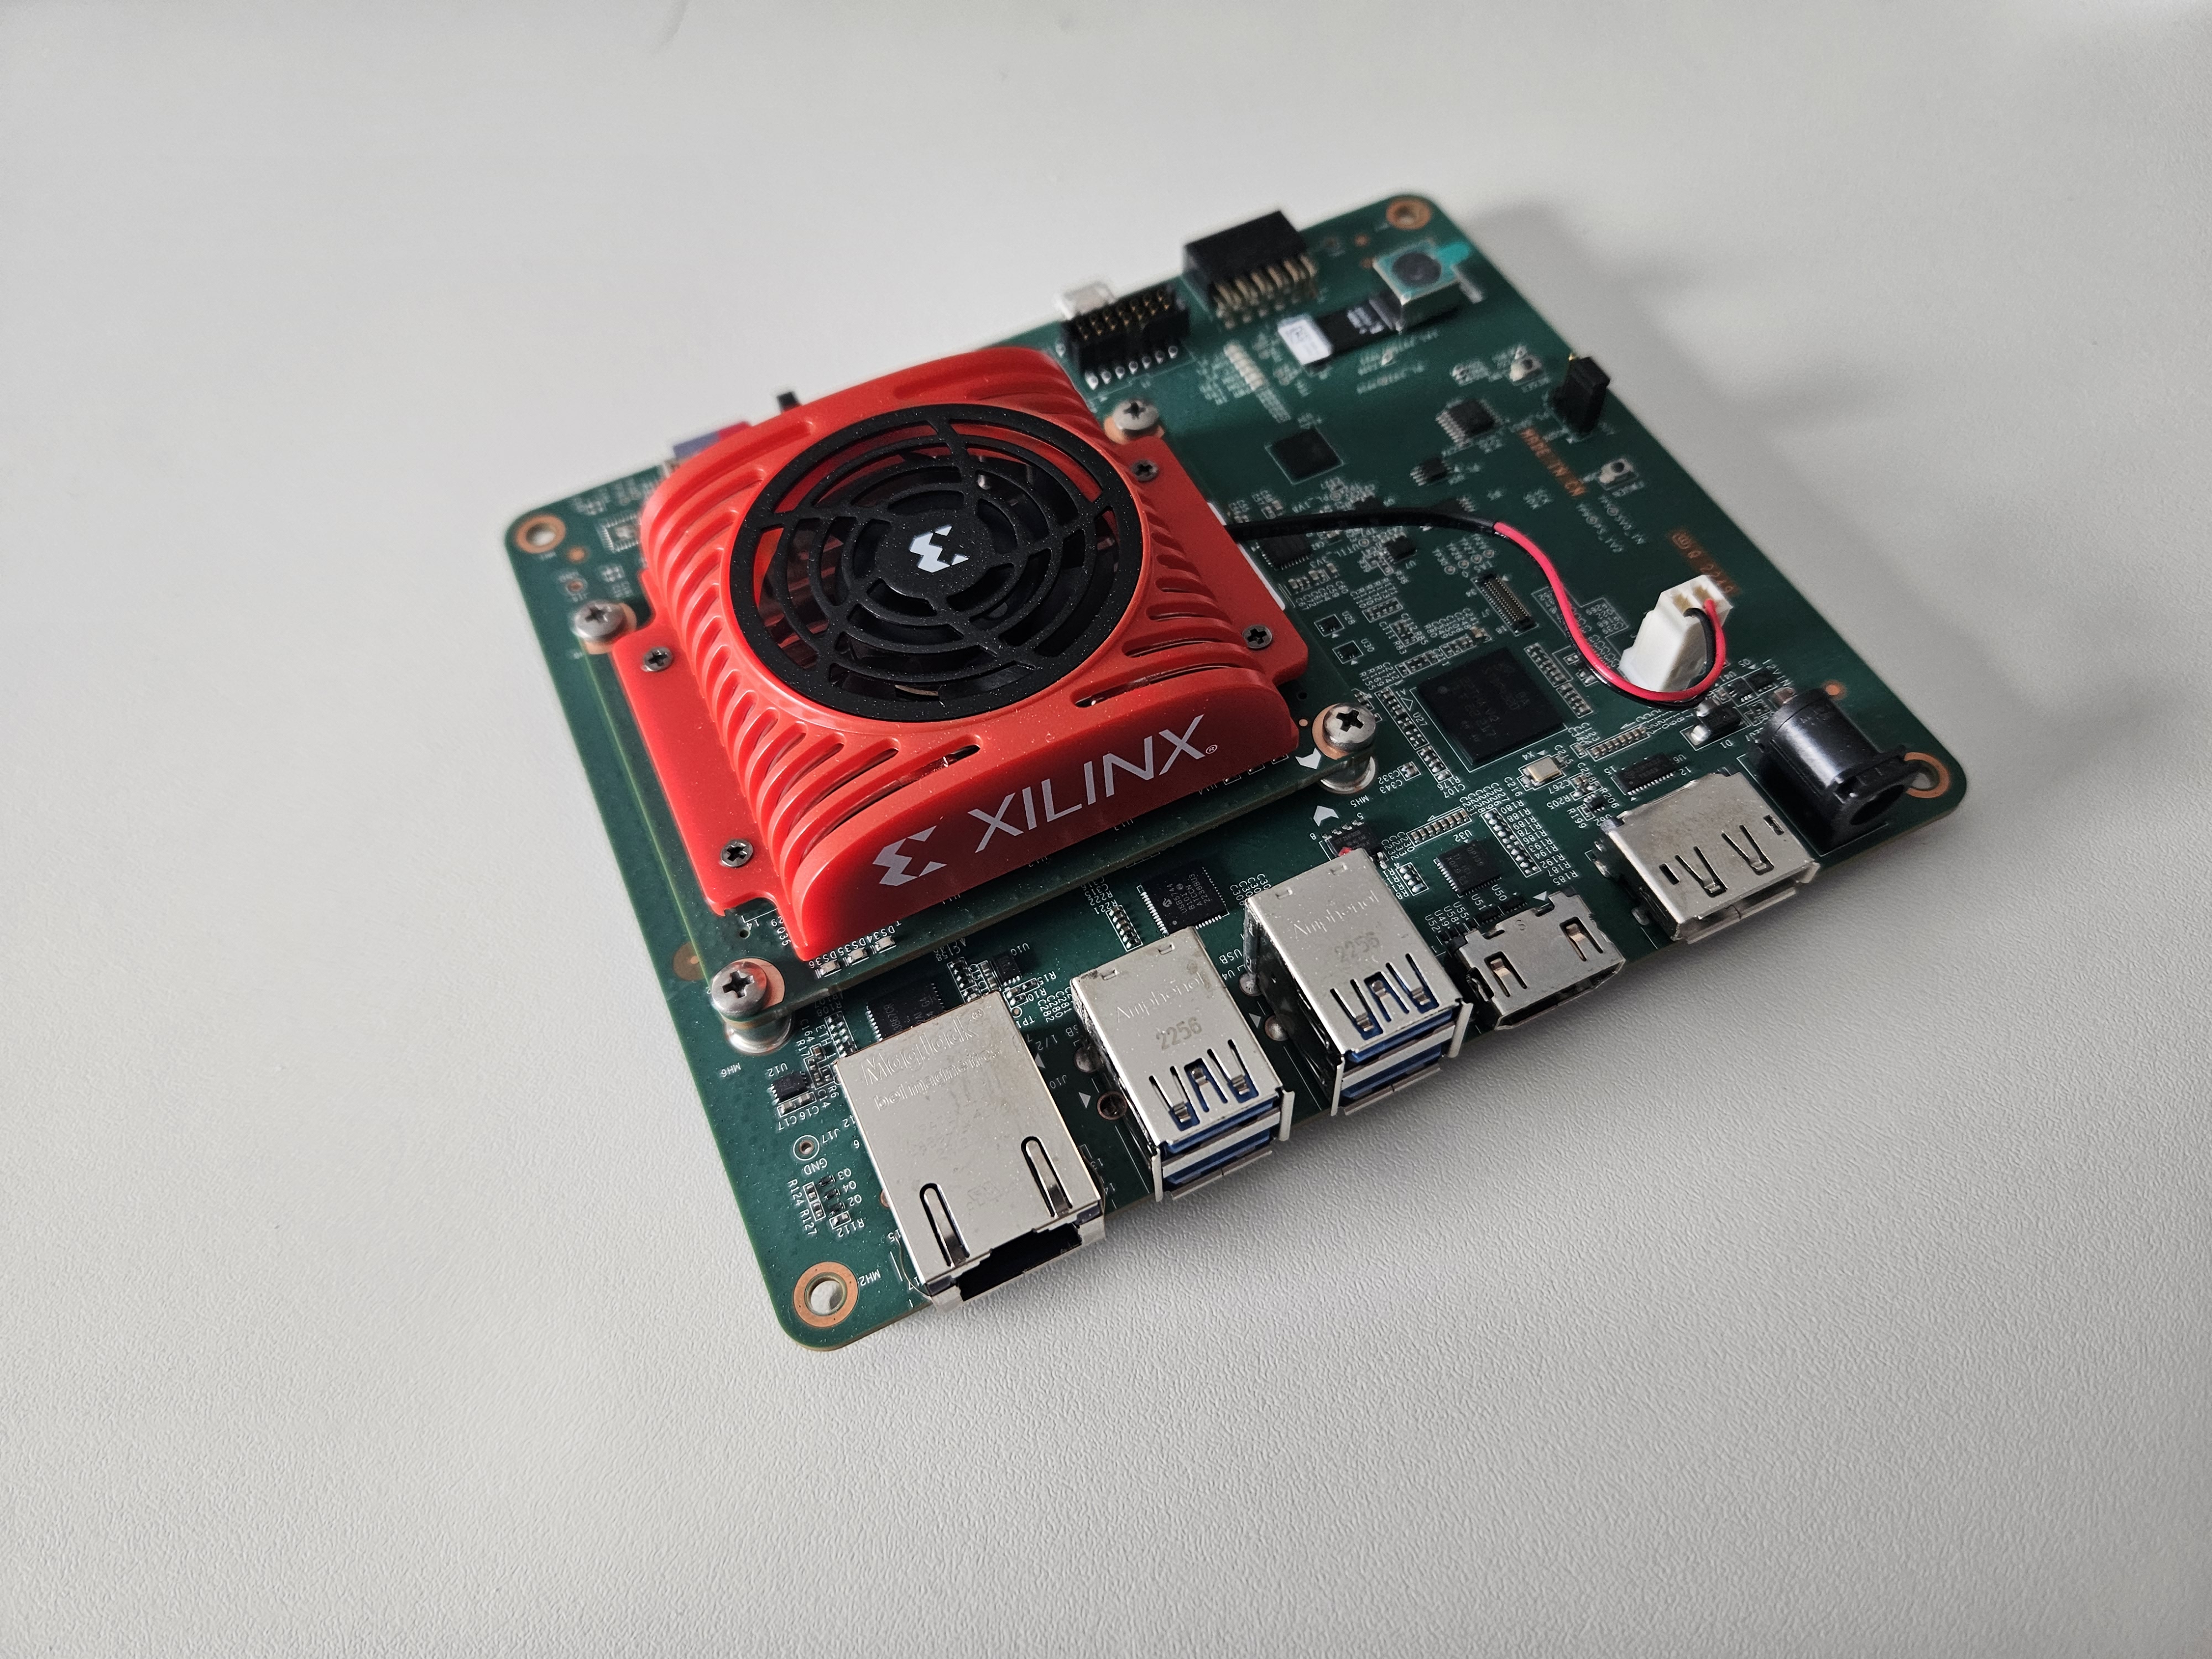 The Xilinx KV260 board brings a Xilinx SoC with camera peripherals onto a 10cm x 10cm board